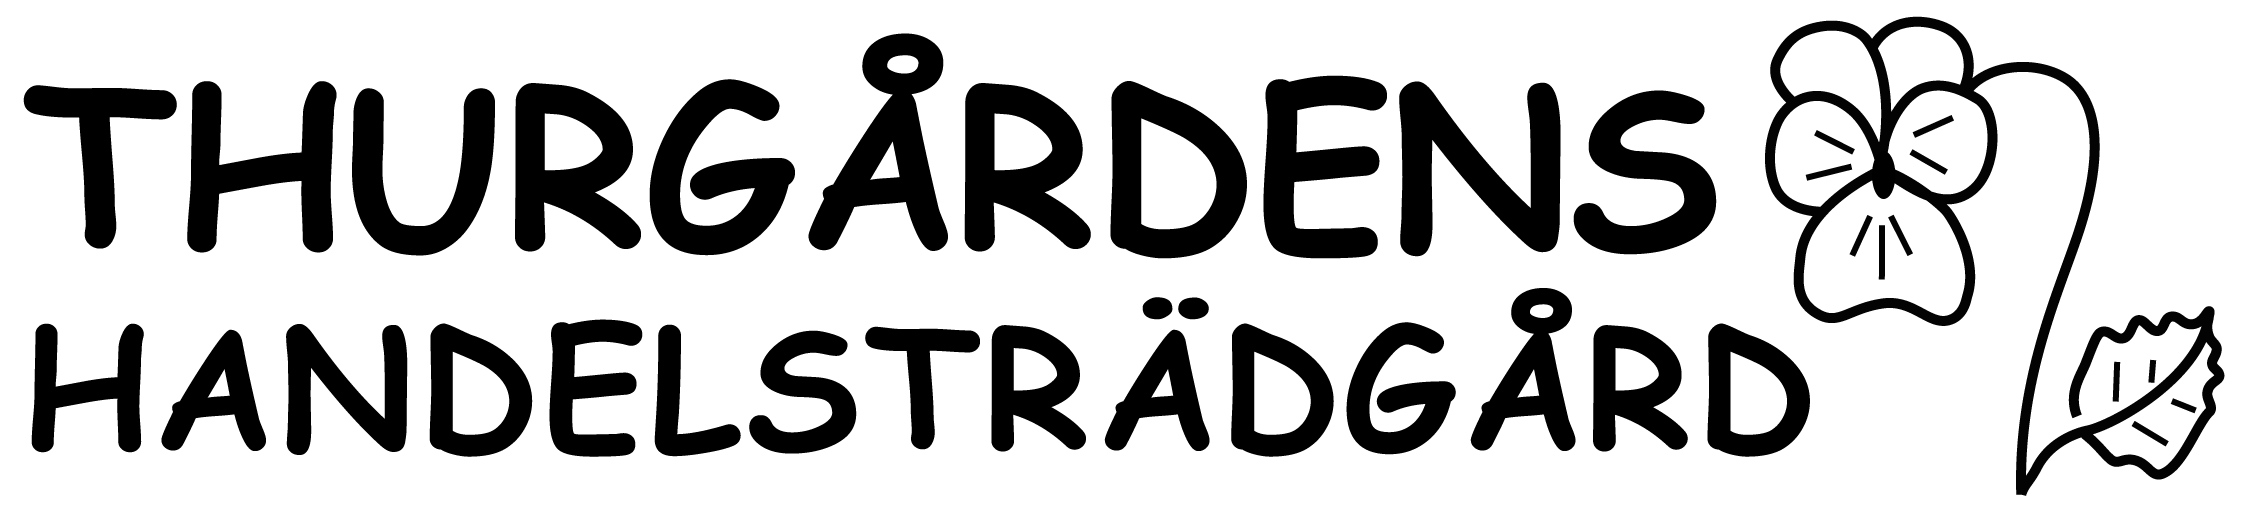 Thurgårdens logotyp